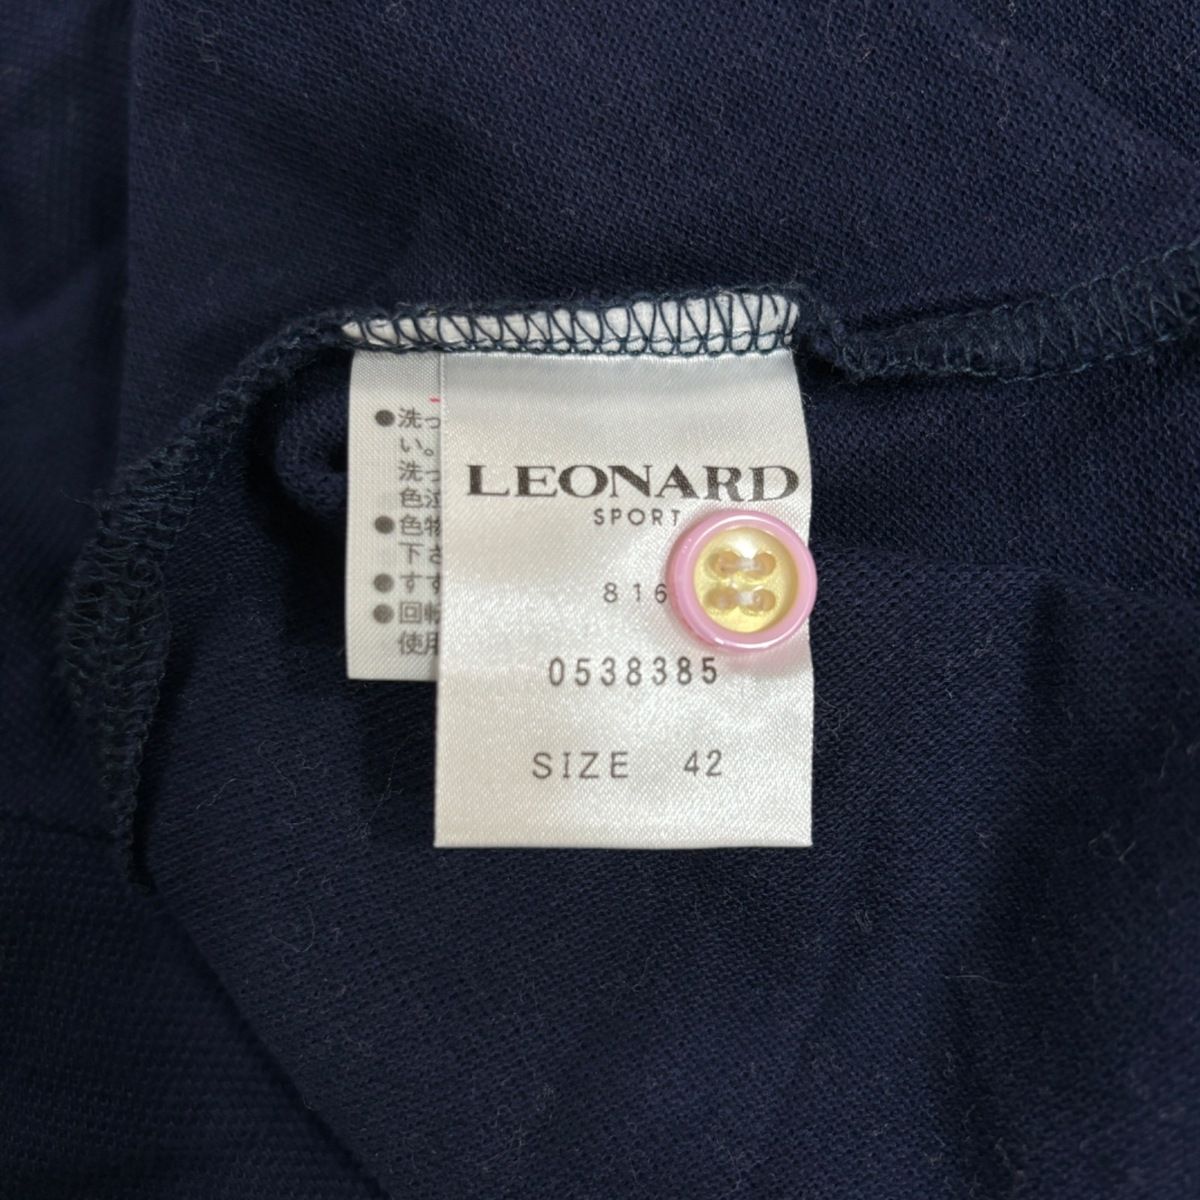 LEONARD SPORT(レオナールスポーツ) 半袖ポロシャツ サイズ42 L 